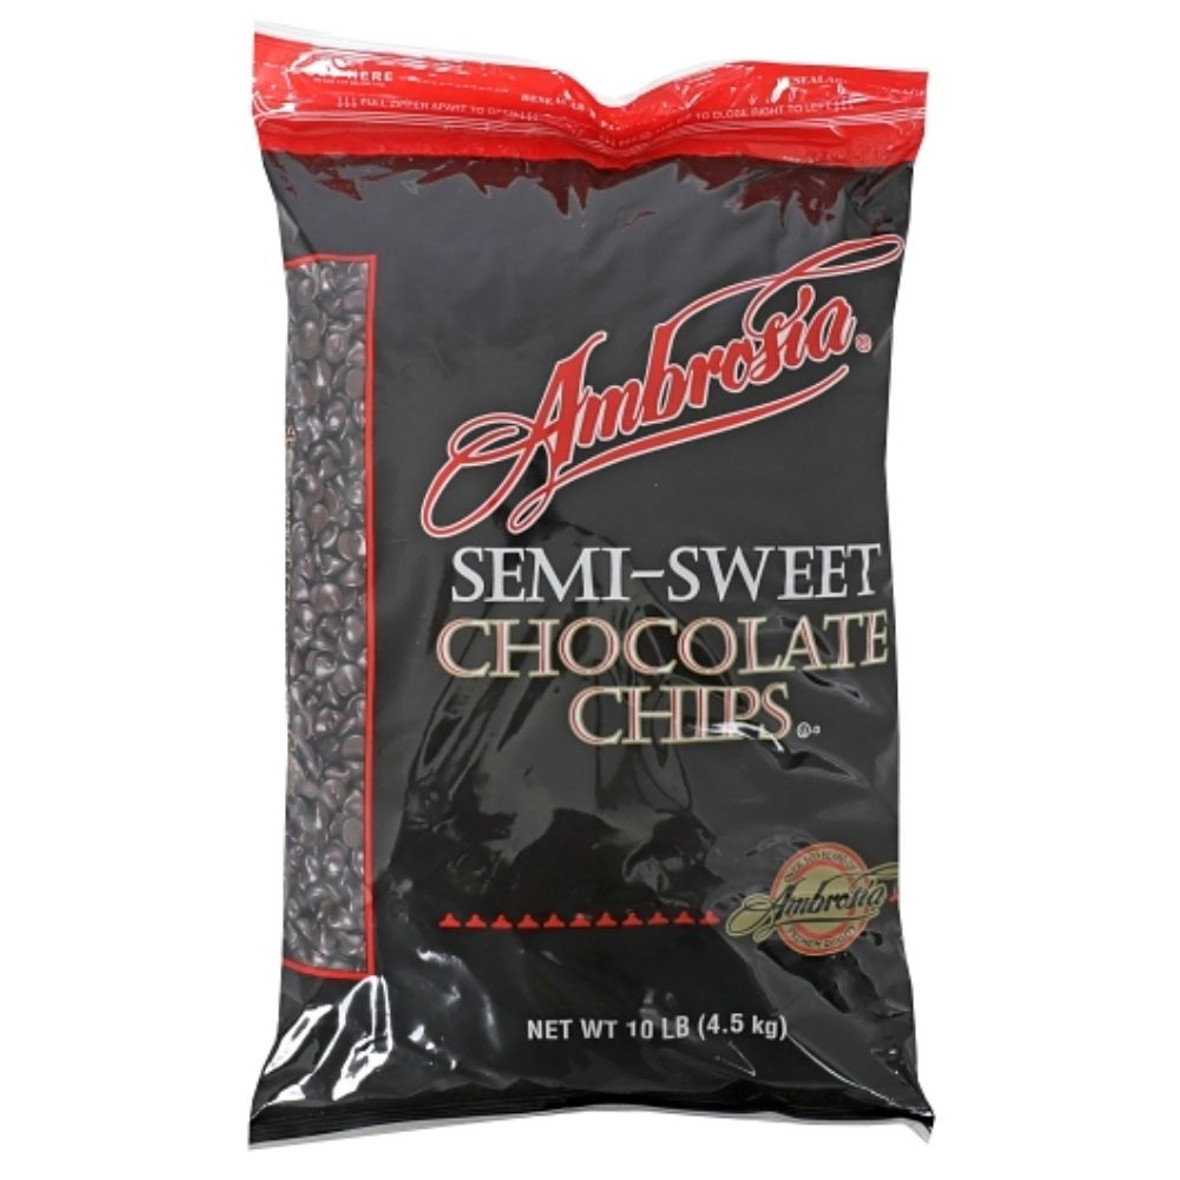 Ambrosia Semi-Sweet Chocolate Chips